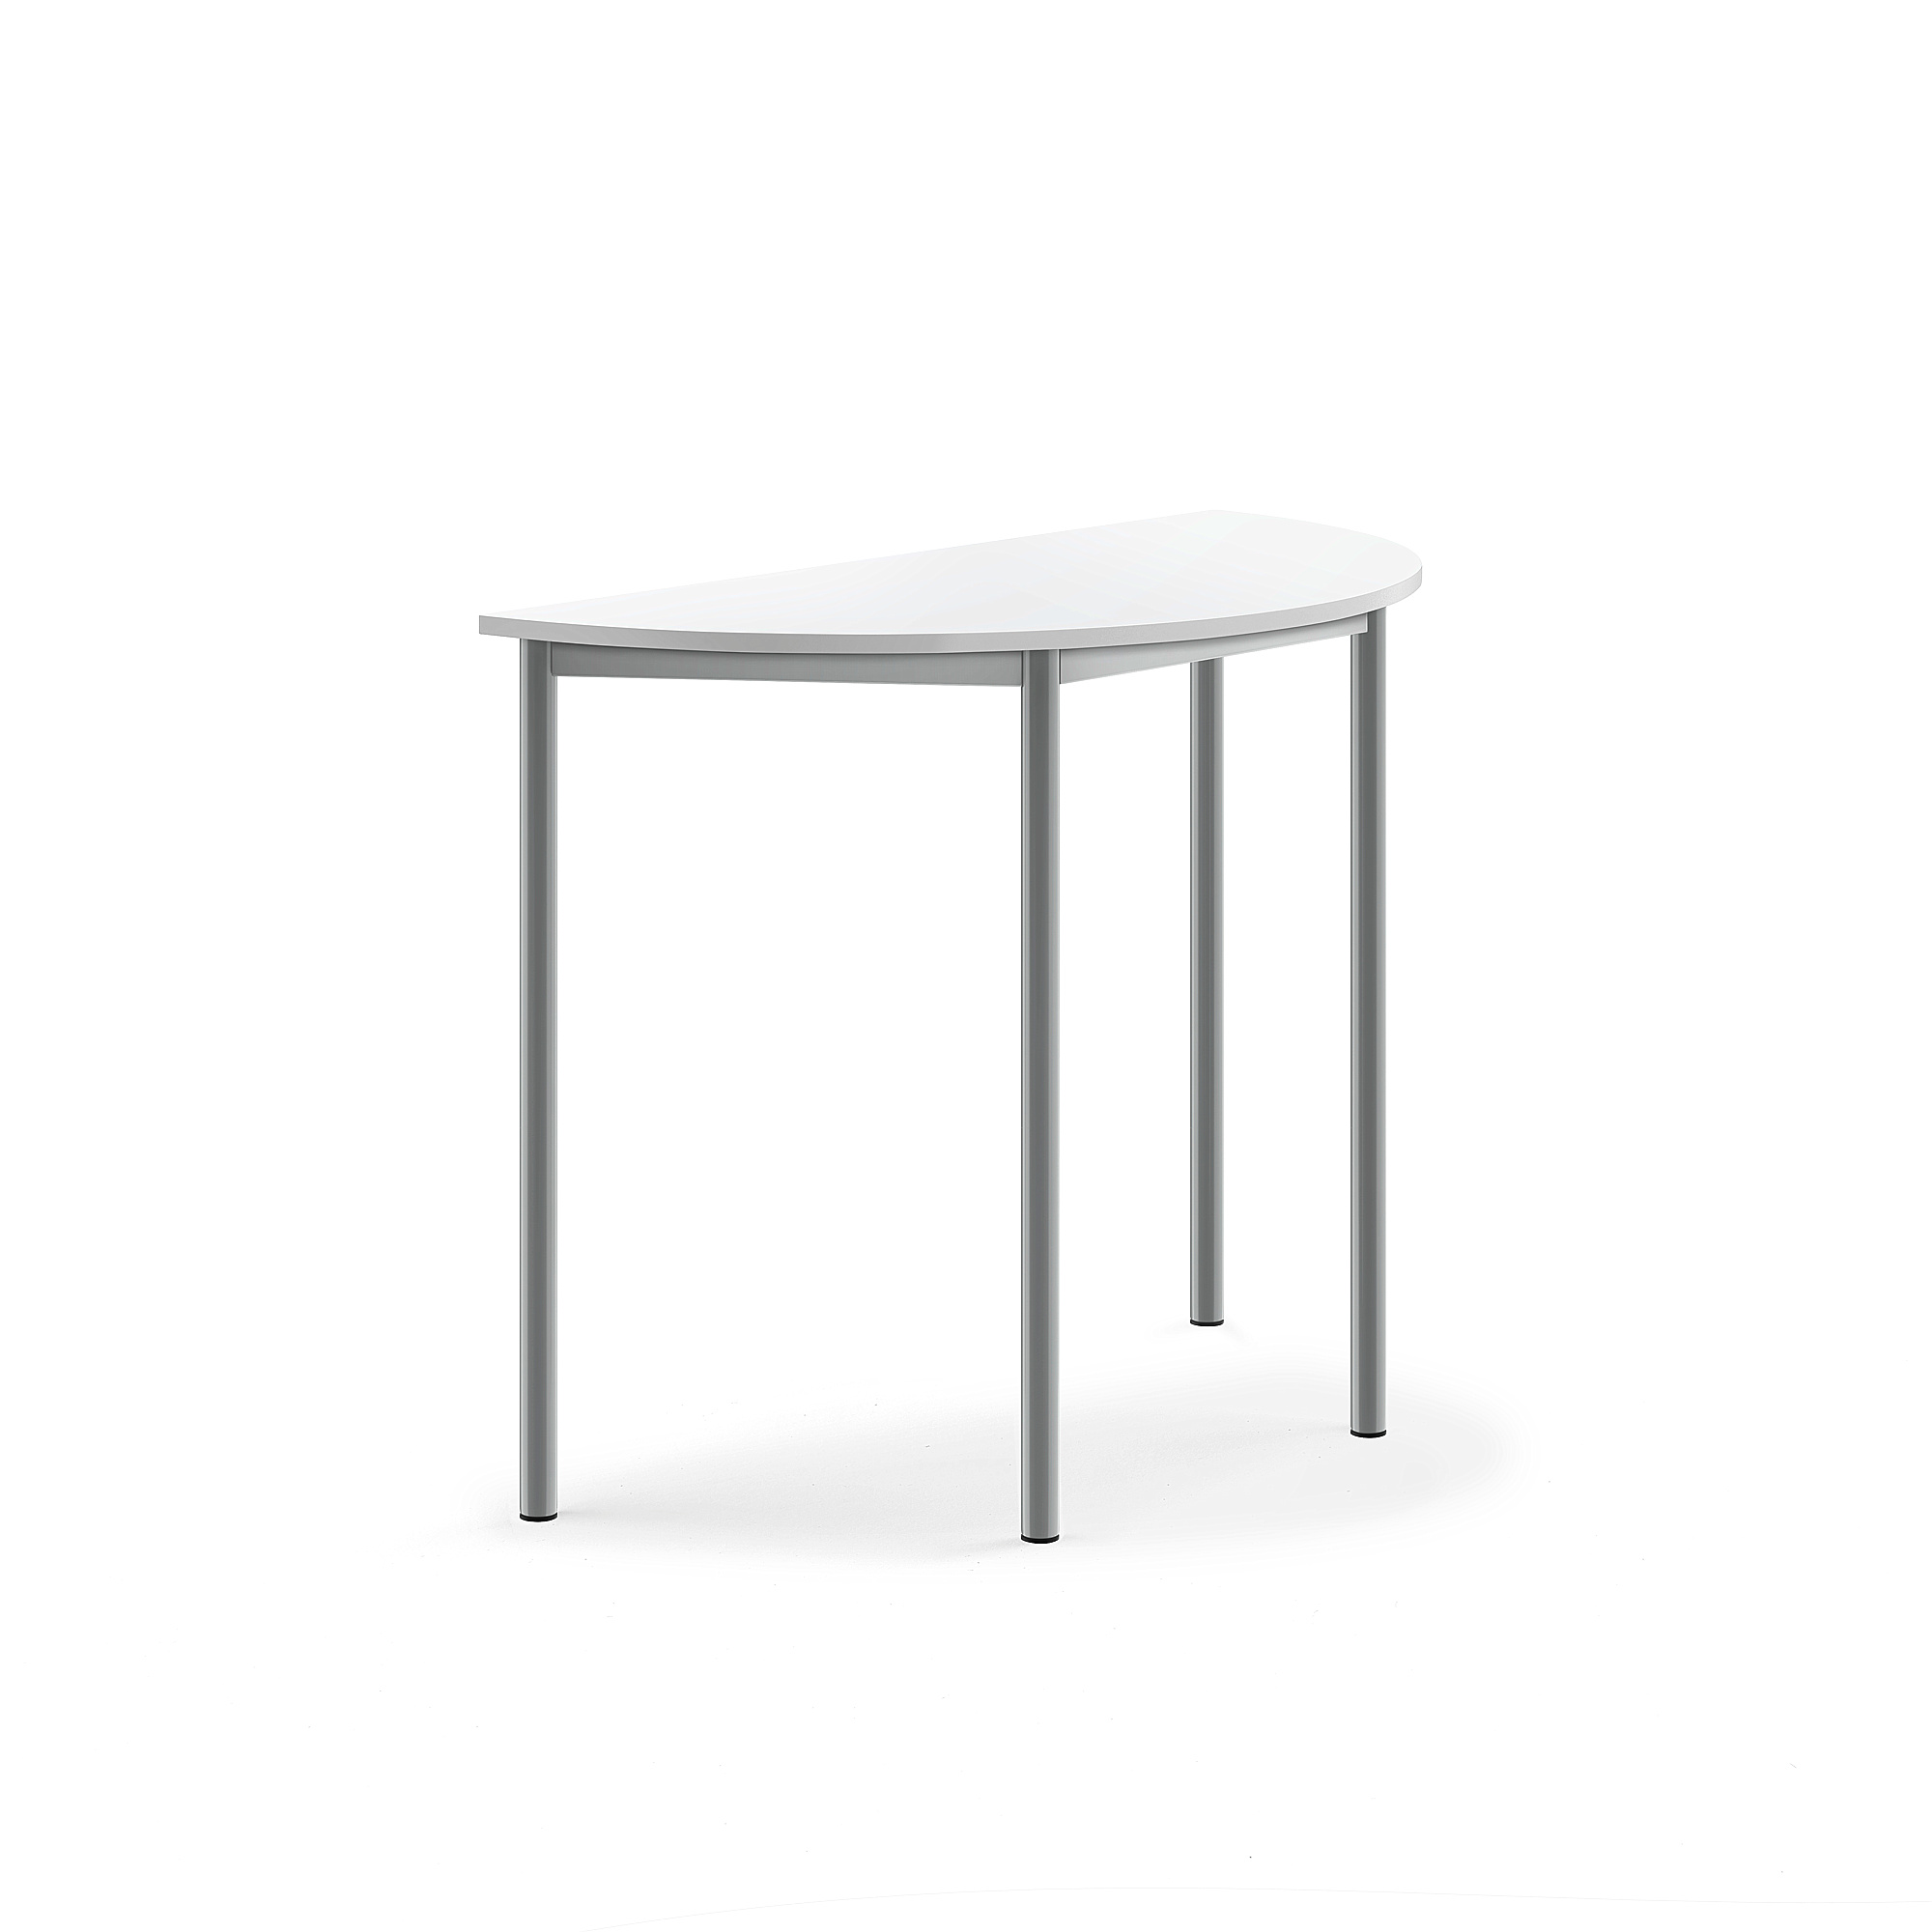 Stůl BORÅS, půlkruh, 1200x600x900 mm, stříbrné nohy, HPL deska, bílá